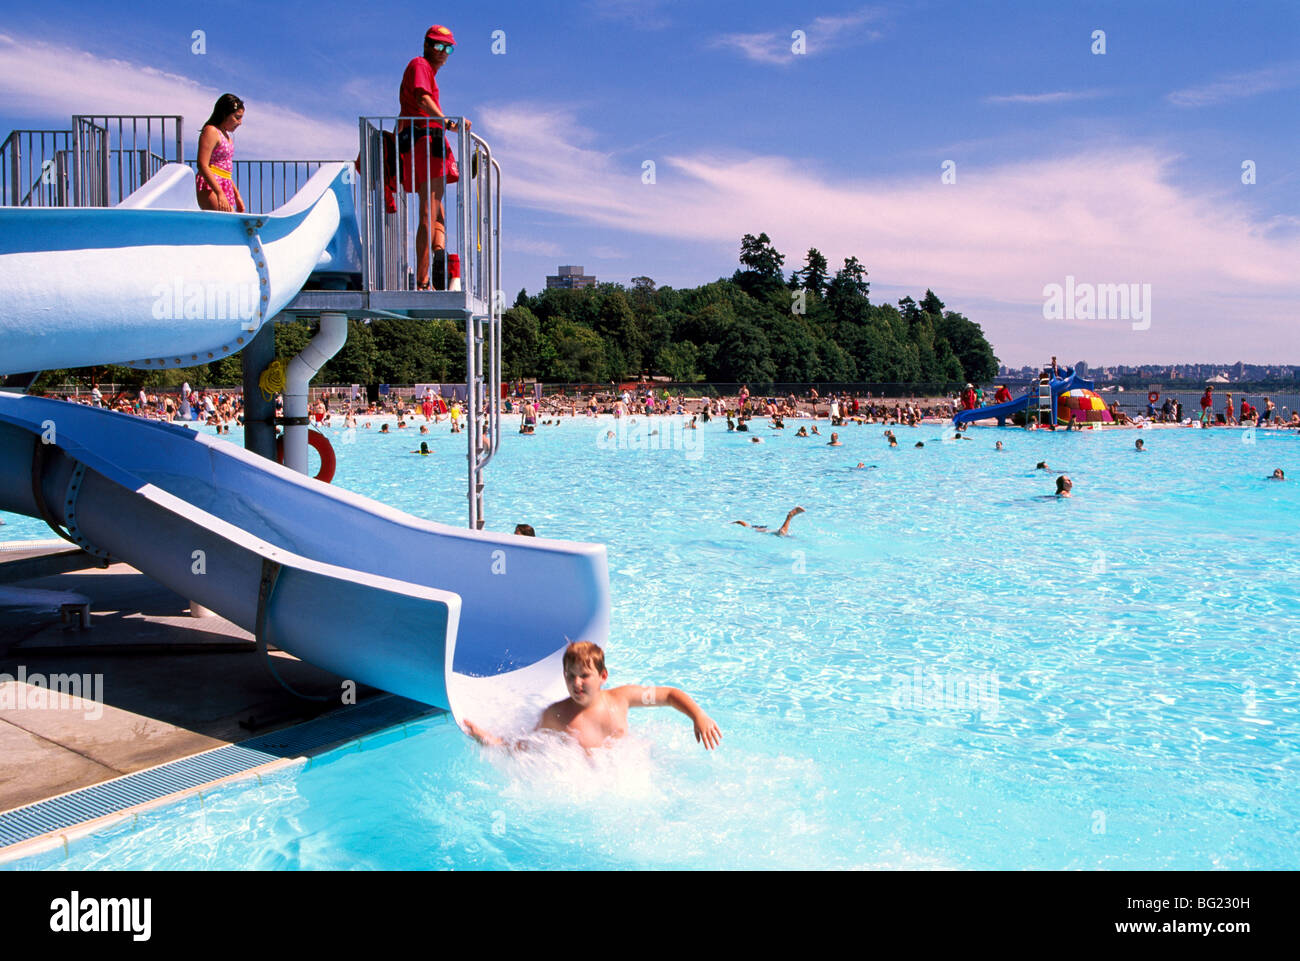 https://www.alamy.com/aggregator-api/download?url=https://c8.alamy.com/comp/BG230H/childrens-water-slide-at-outdoor-swimming-pool-stanley-park-vancouver-BG230H.jpg